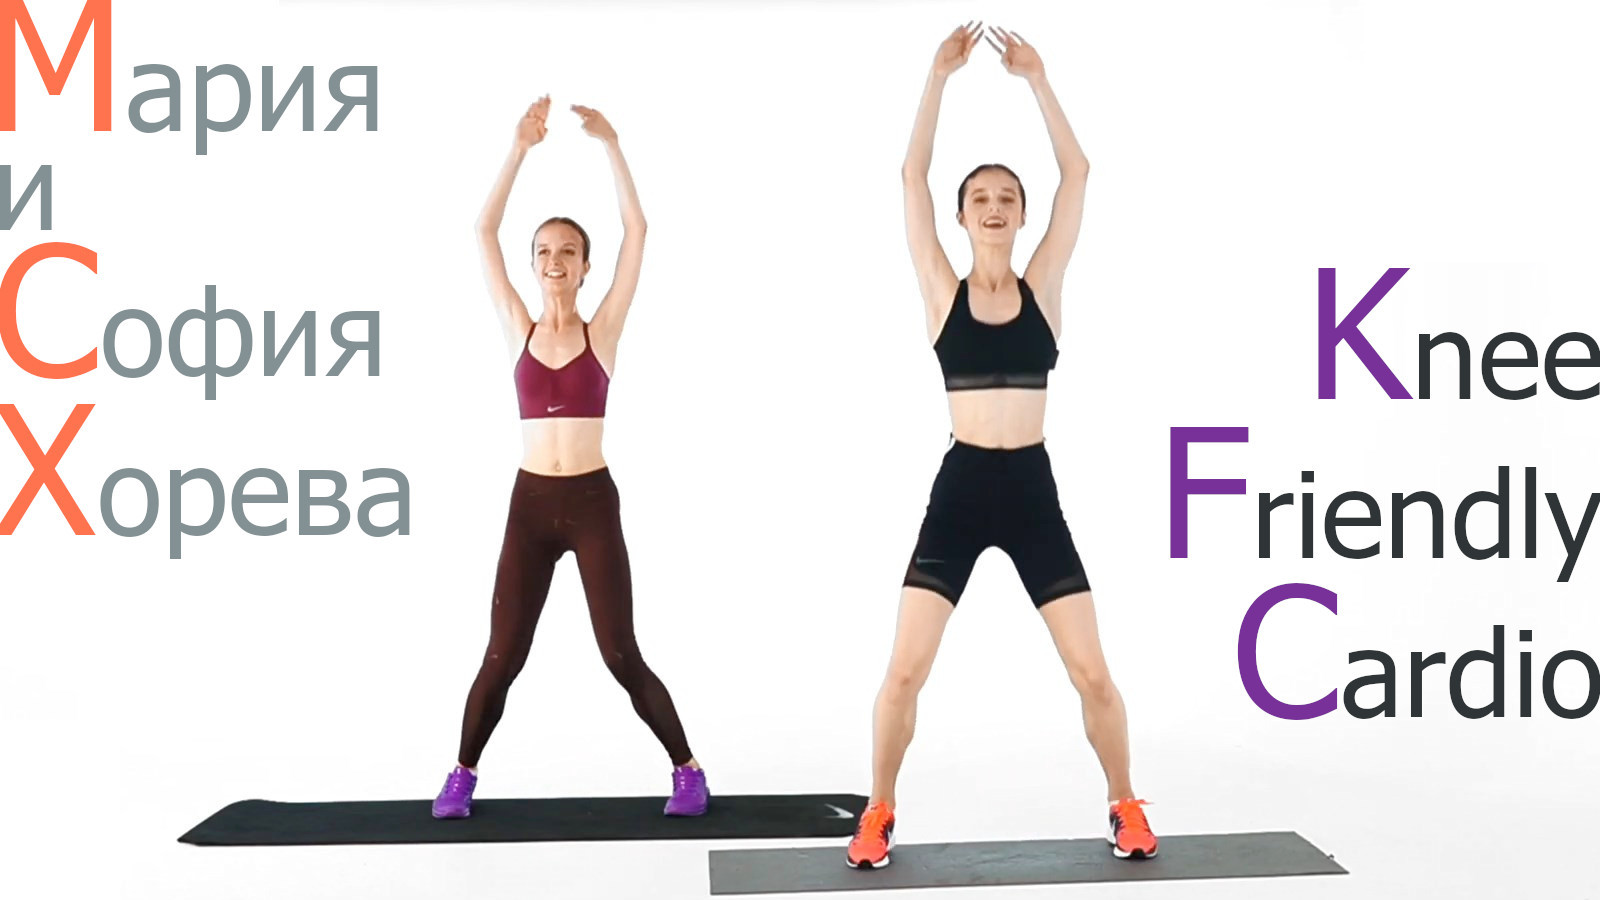 Maria Khoreva and Sofya Khoreva - Knee Friendly Cardio Workout